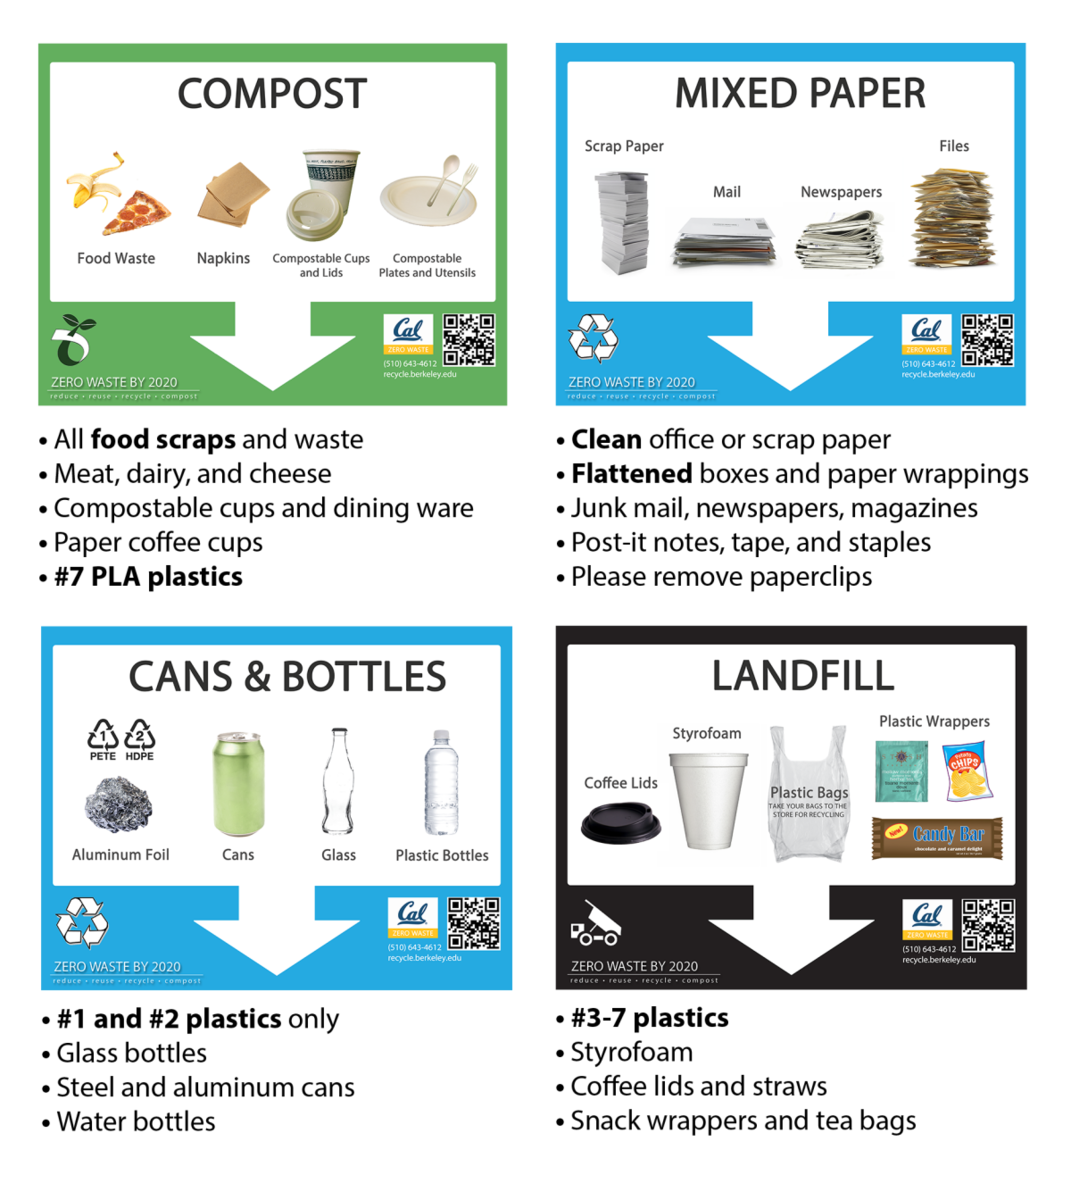 Is Aluminum Foil Biodegradable? - Waste Nil